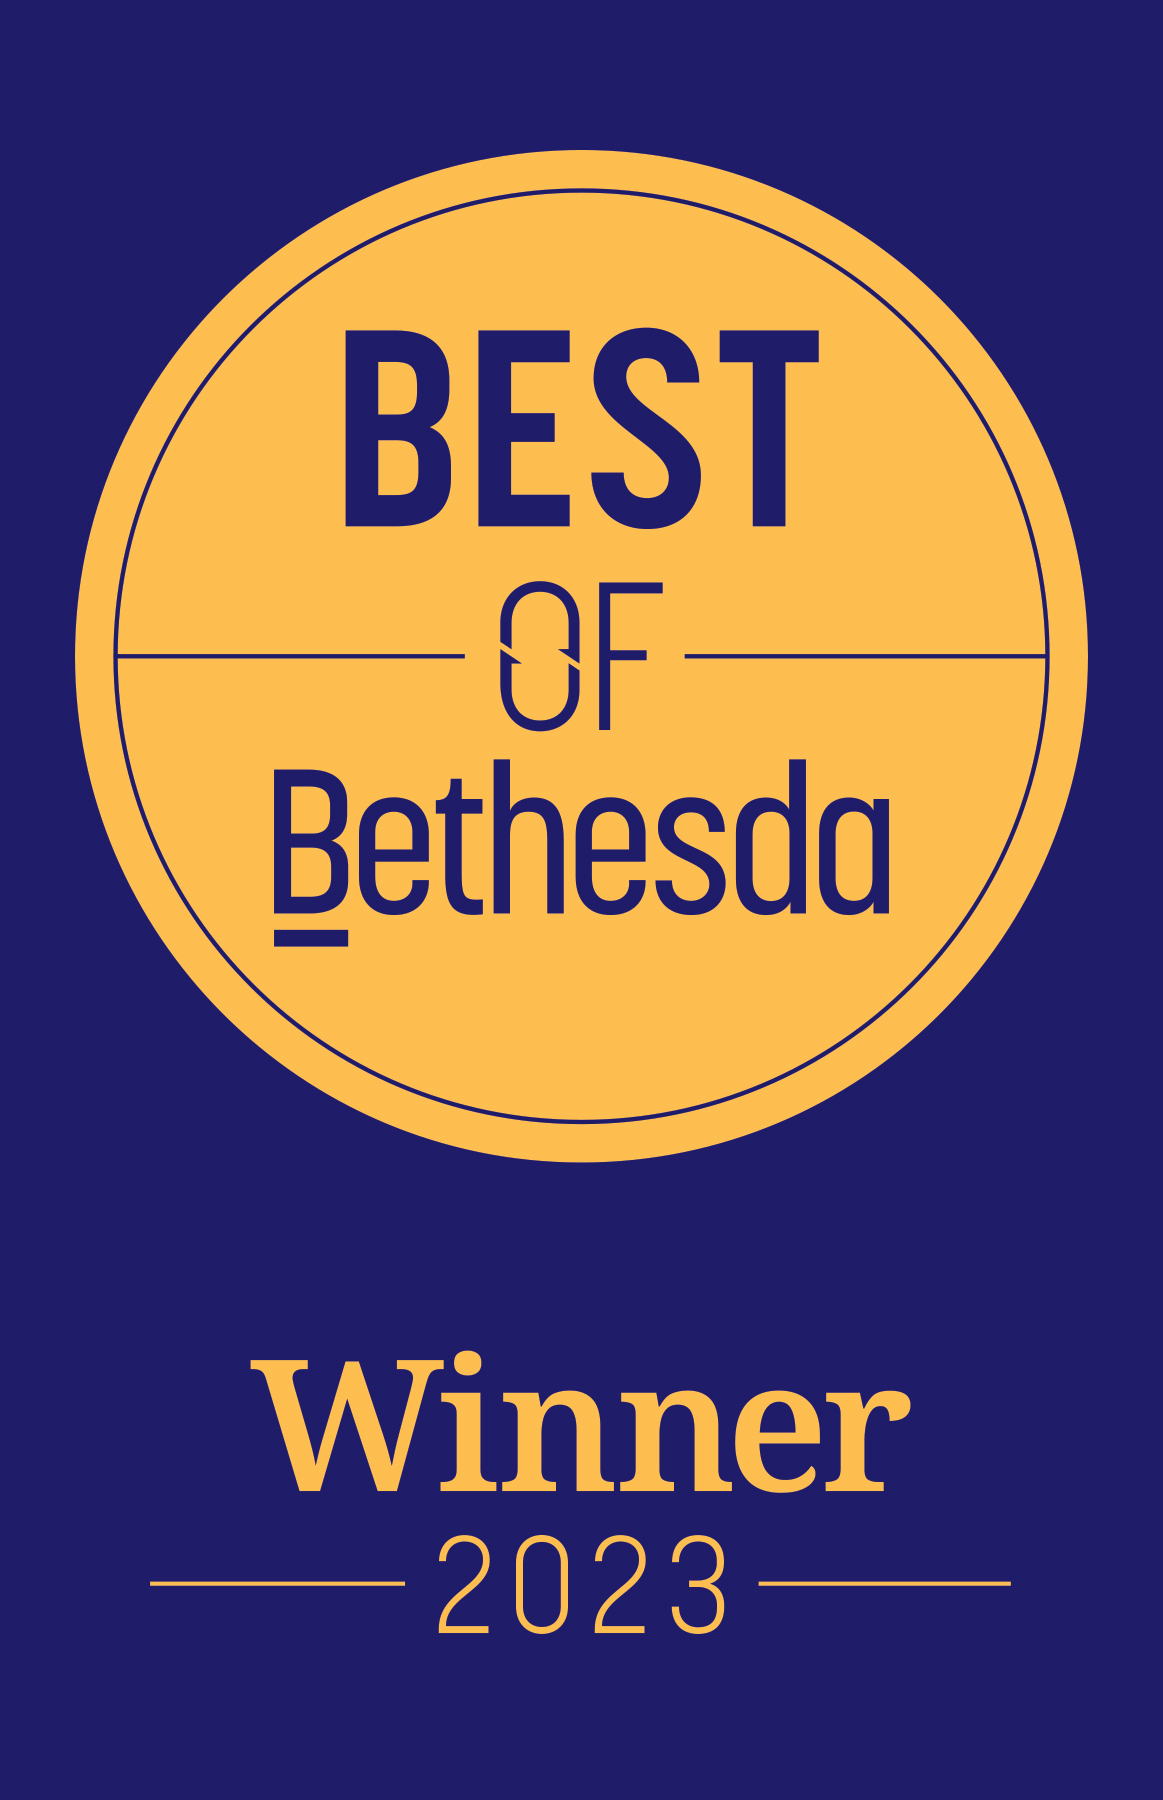 Best of Bethesda Winner icon dark blue background gold and white text